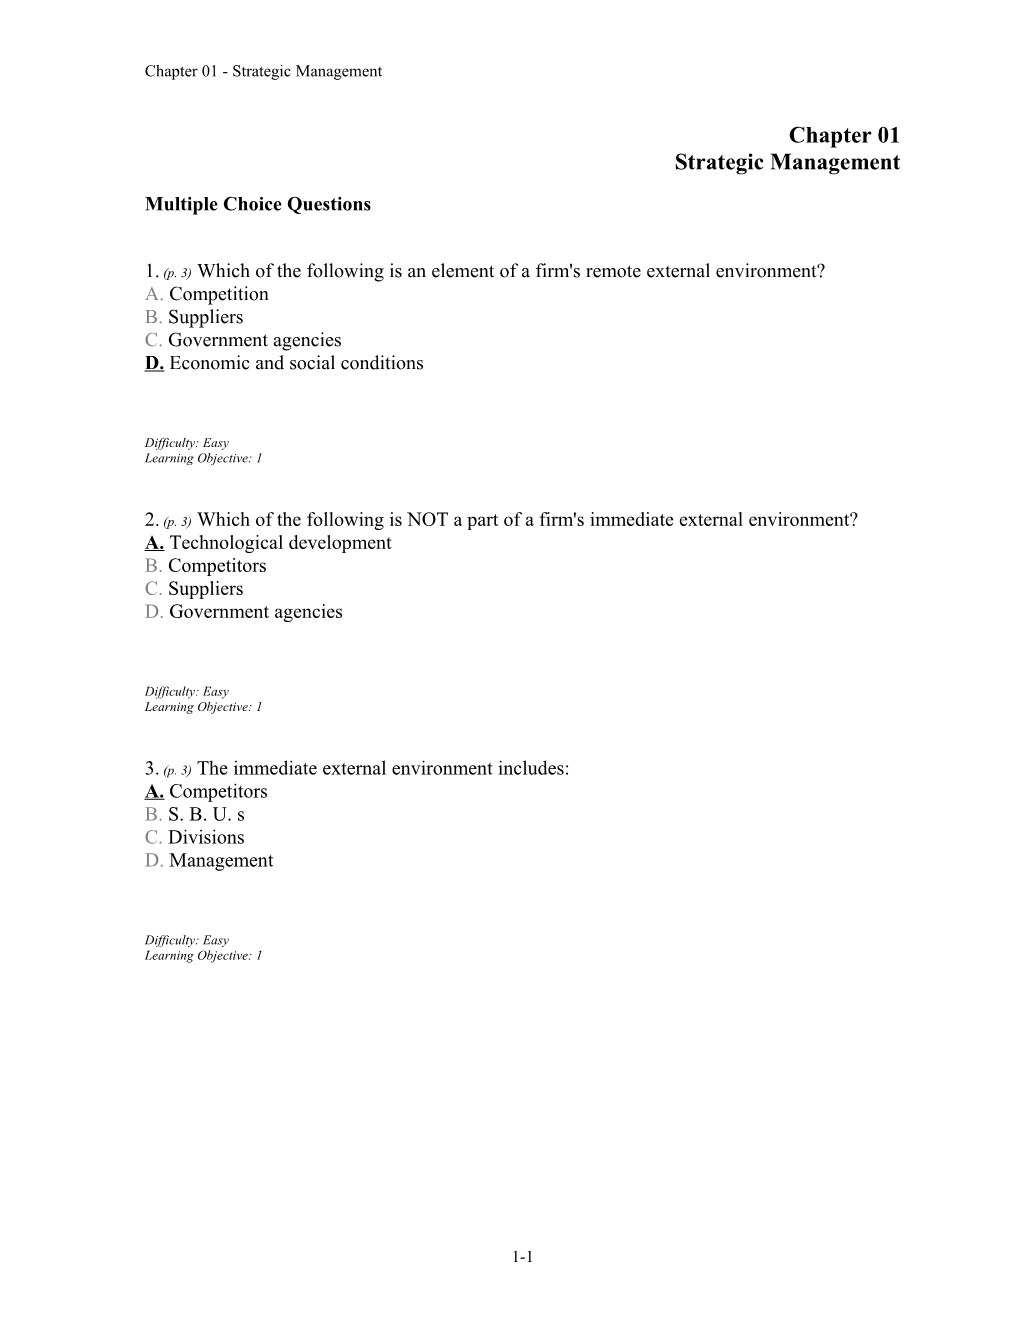 Chapter 01 Strategic Management